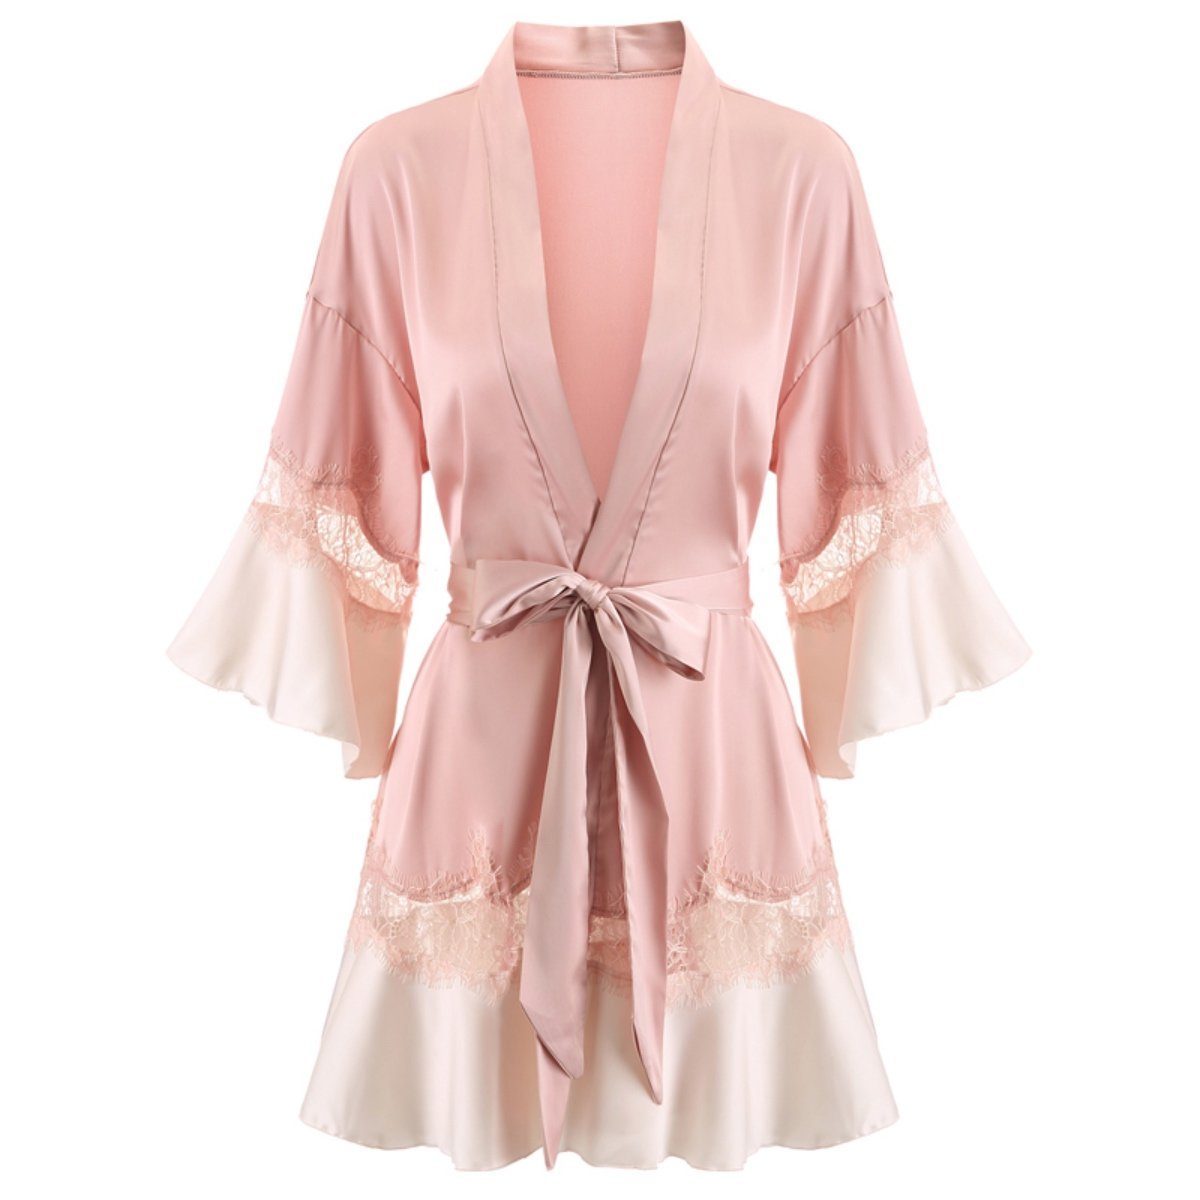 Leonida cami set Intimates LOVEFREYA Robe only (Free size) Pink 